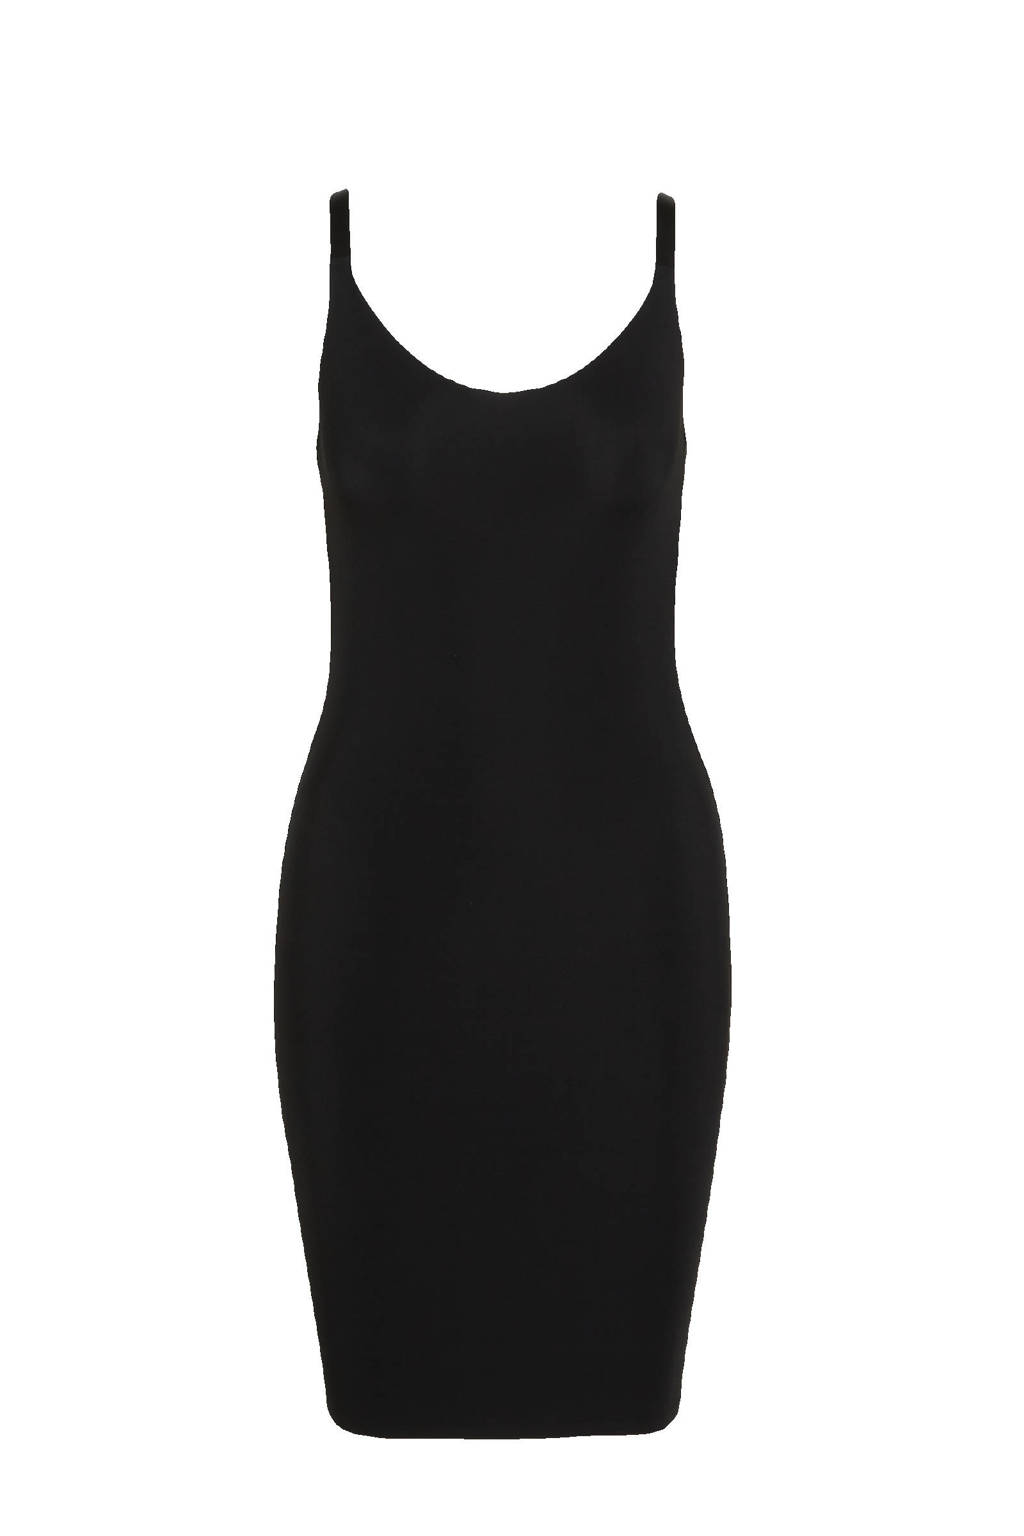 Schuldig vrijdag Prestige WE Fashion corrigerende jurk zwart | wehkamp